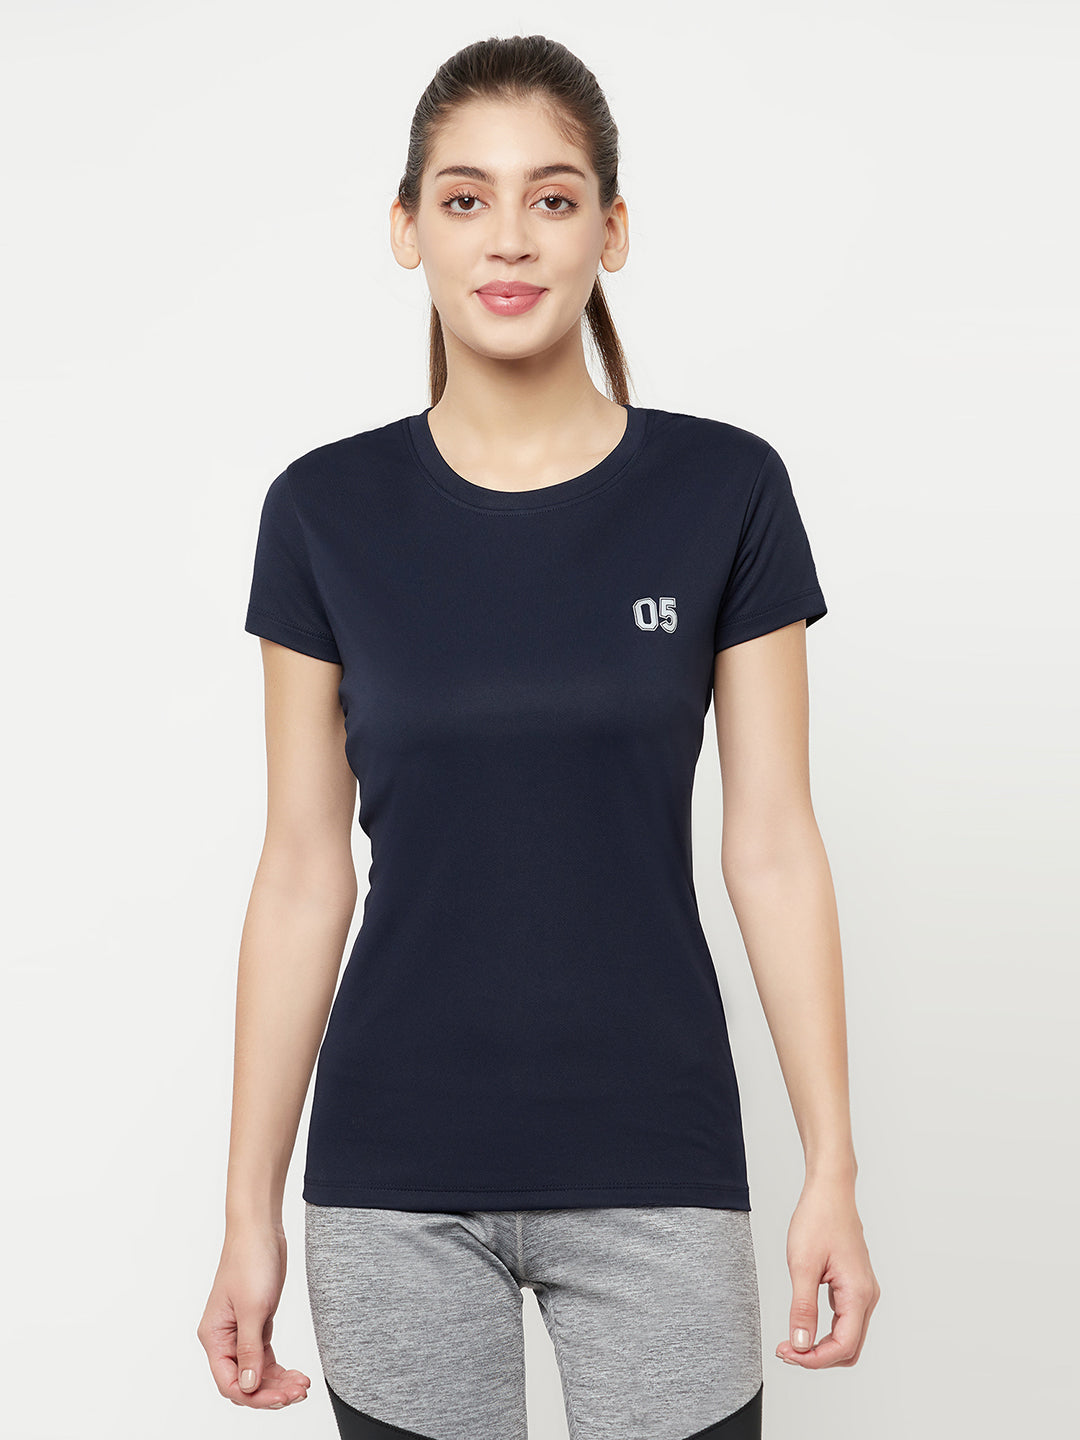 Navy Blue Round Neck Sports T-Shirt - Women T-Shirts